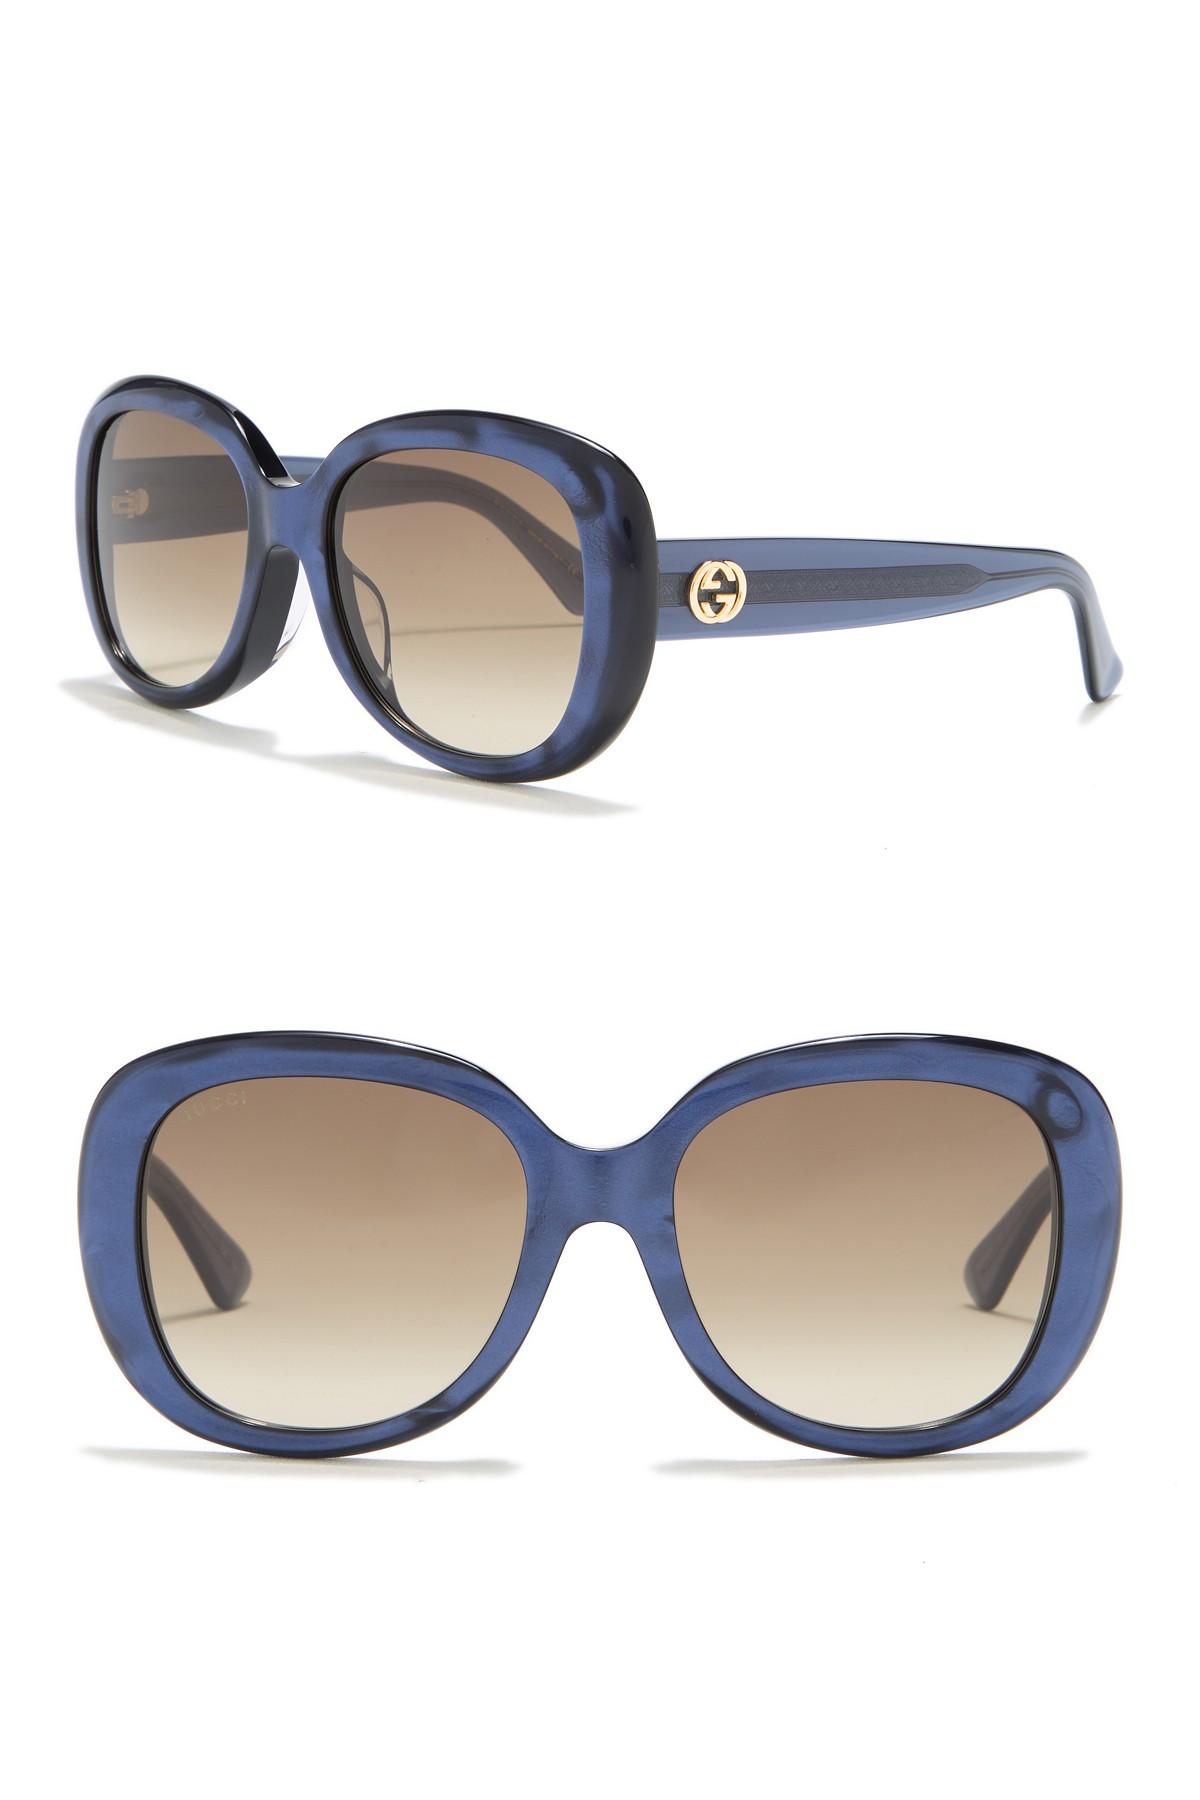 Gucci 55mm Oversize Sunglasses in Blue - Lyst